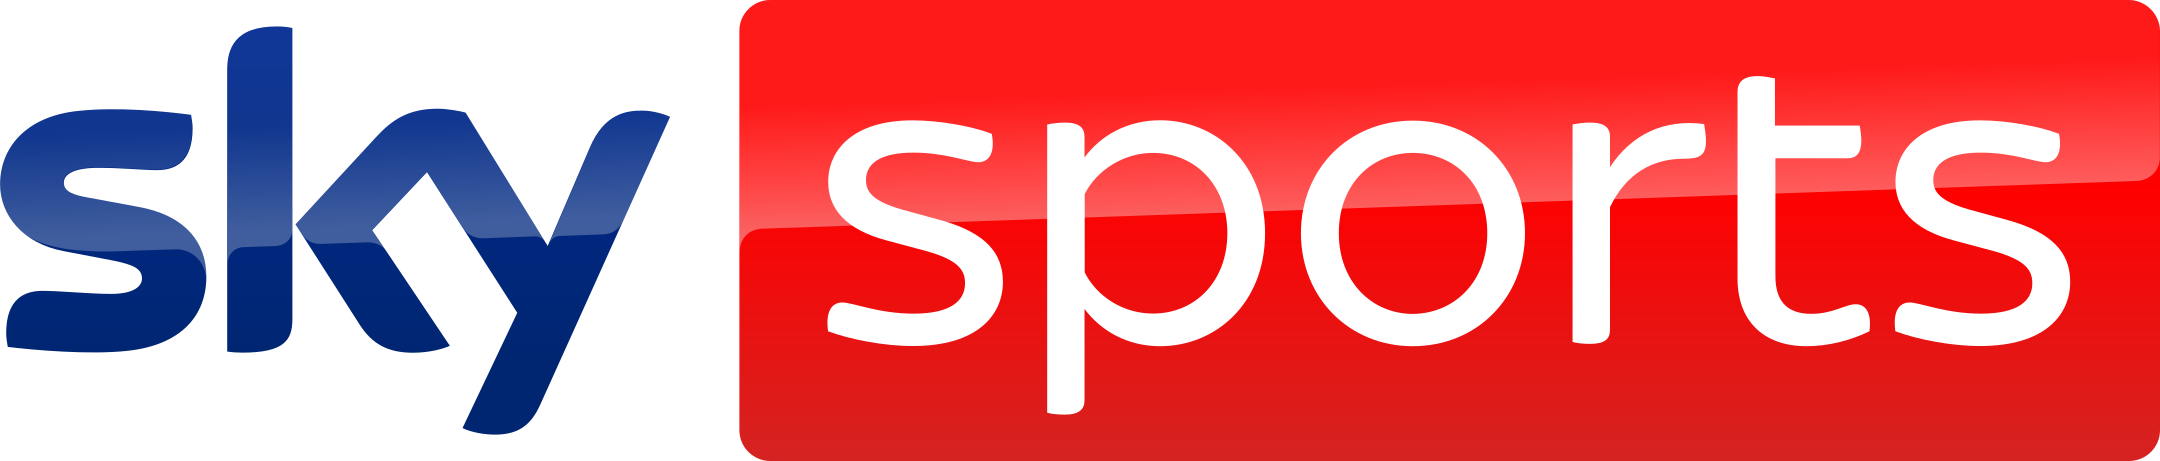 sky sports logo 2 1 - Sky Sports Logo